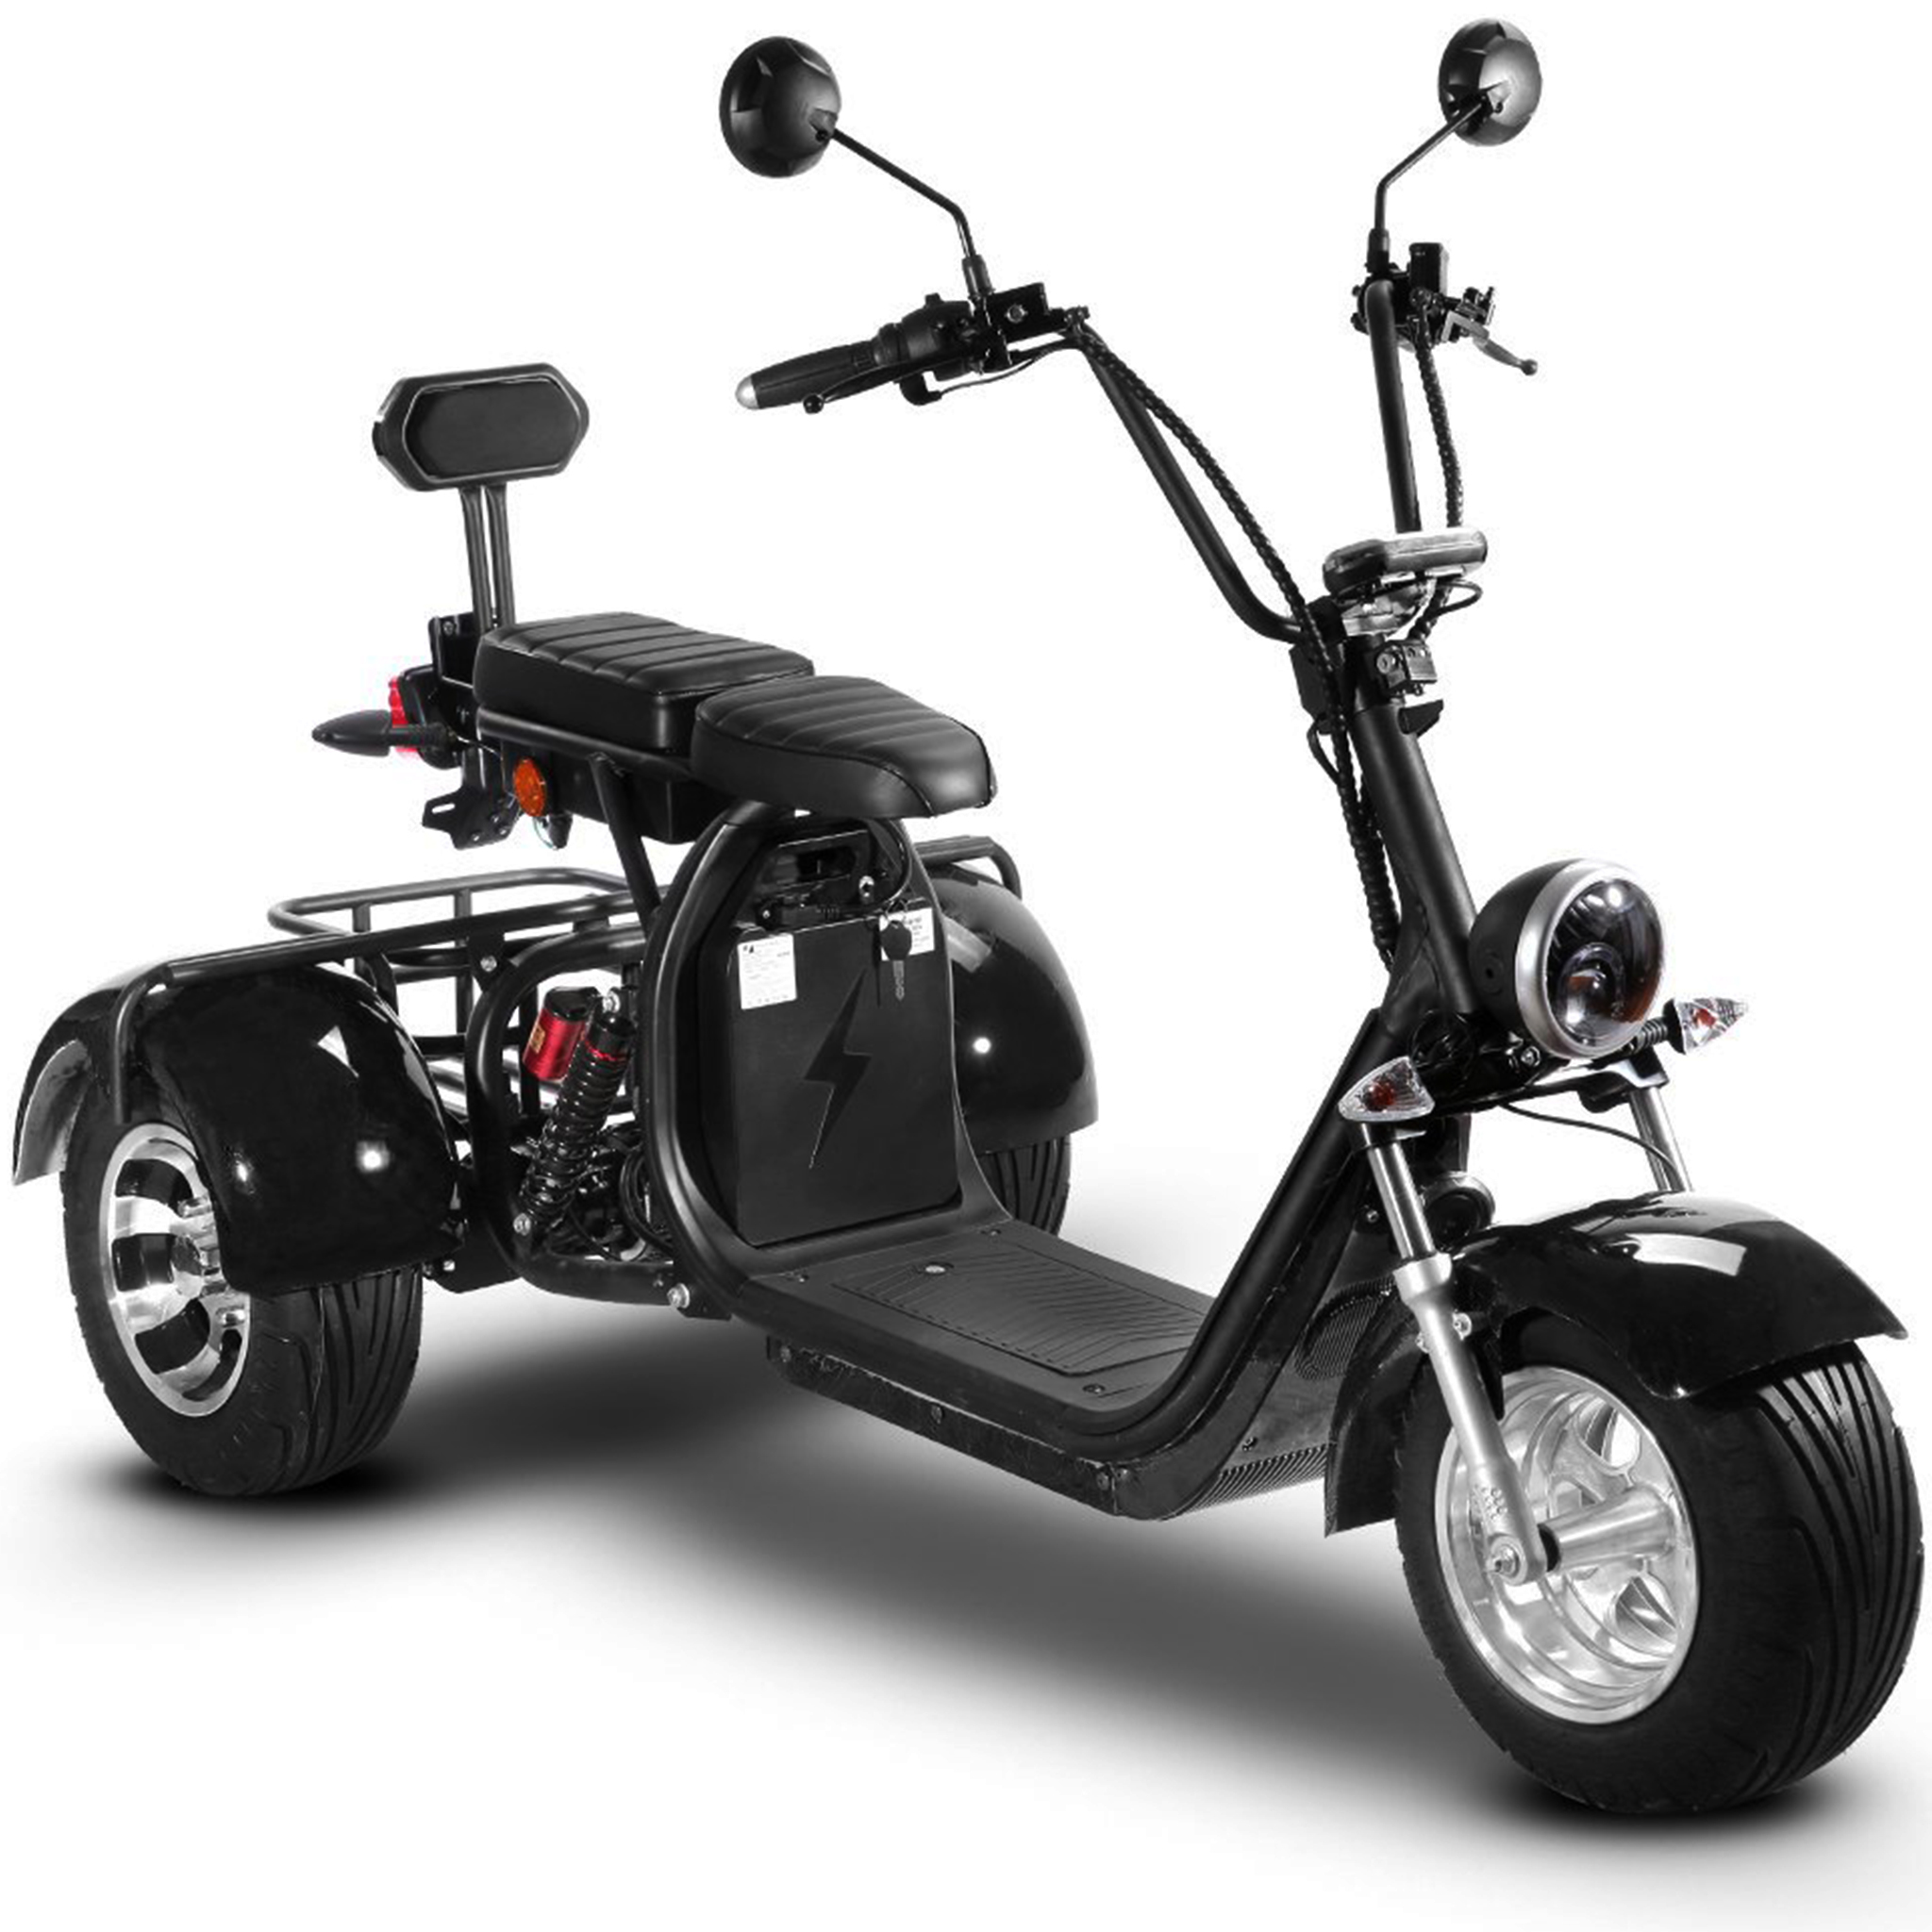 Fatscooter Trehjuling 2000W | Moped klass 1 - Svart